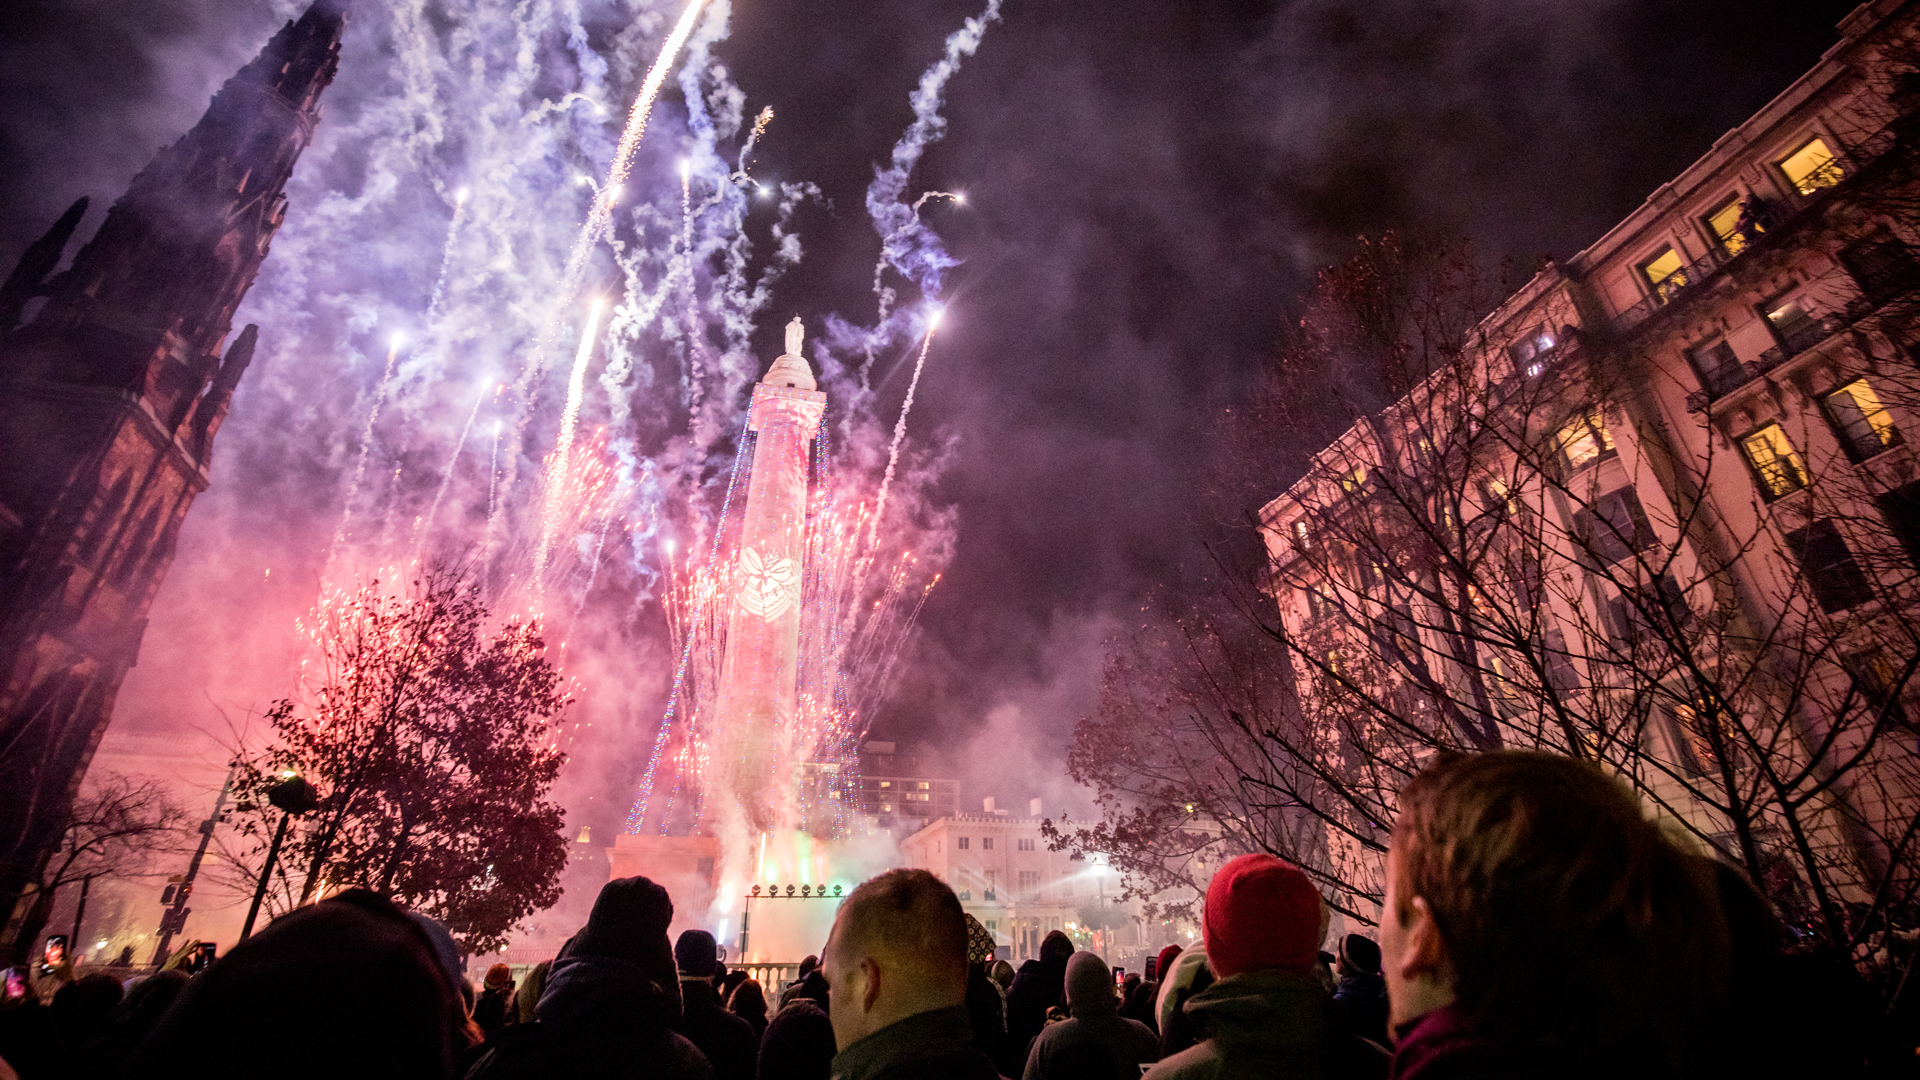 Fireworks show during Baltimore's annual monument Lighting Celebration